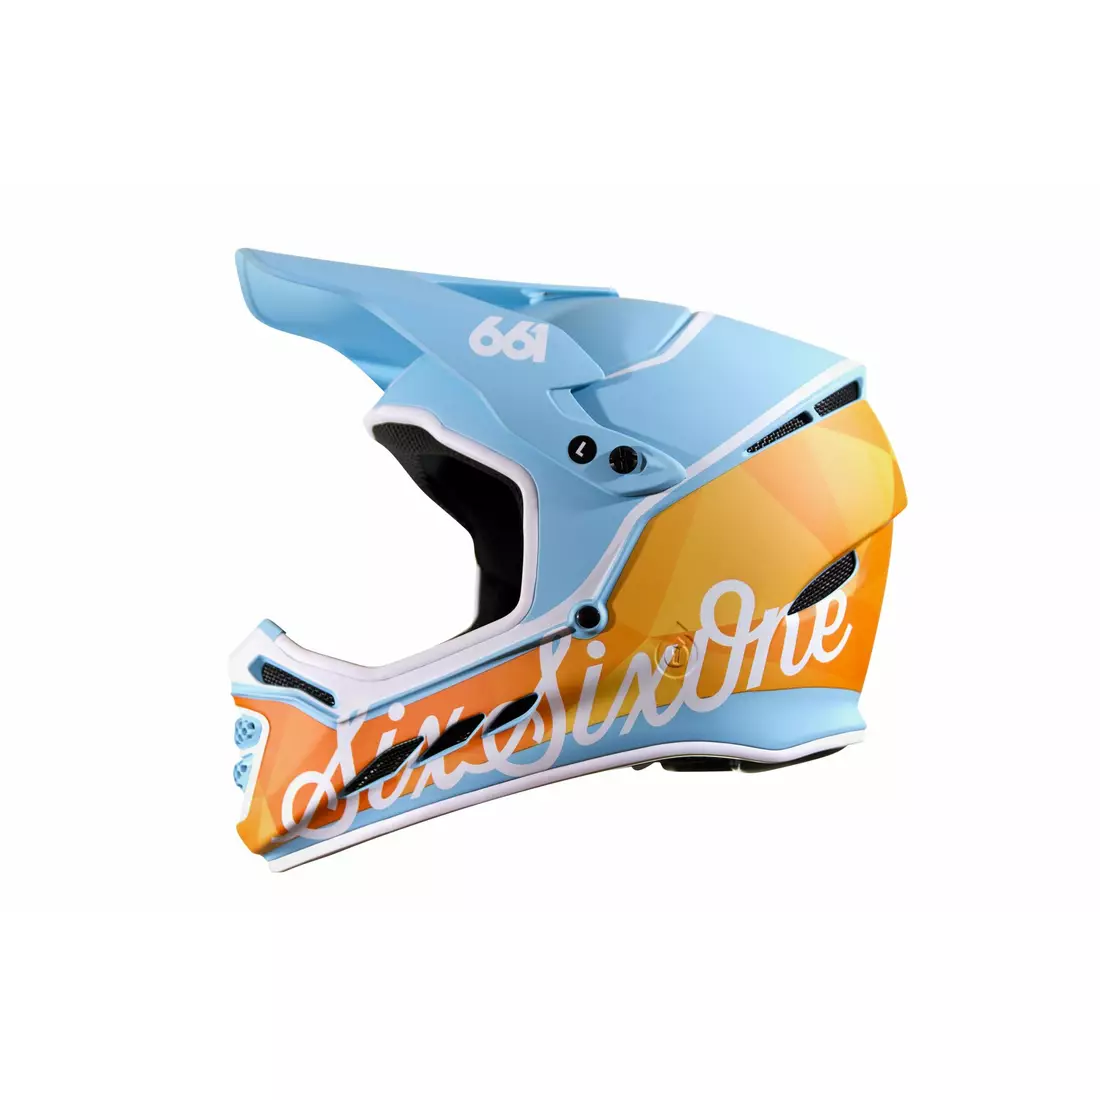 SisSixOne 661 RESET GEO BLORANGE MIPS fullface Fahrradhelm in blau und orange